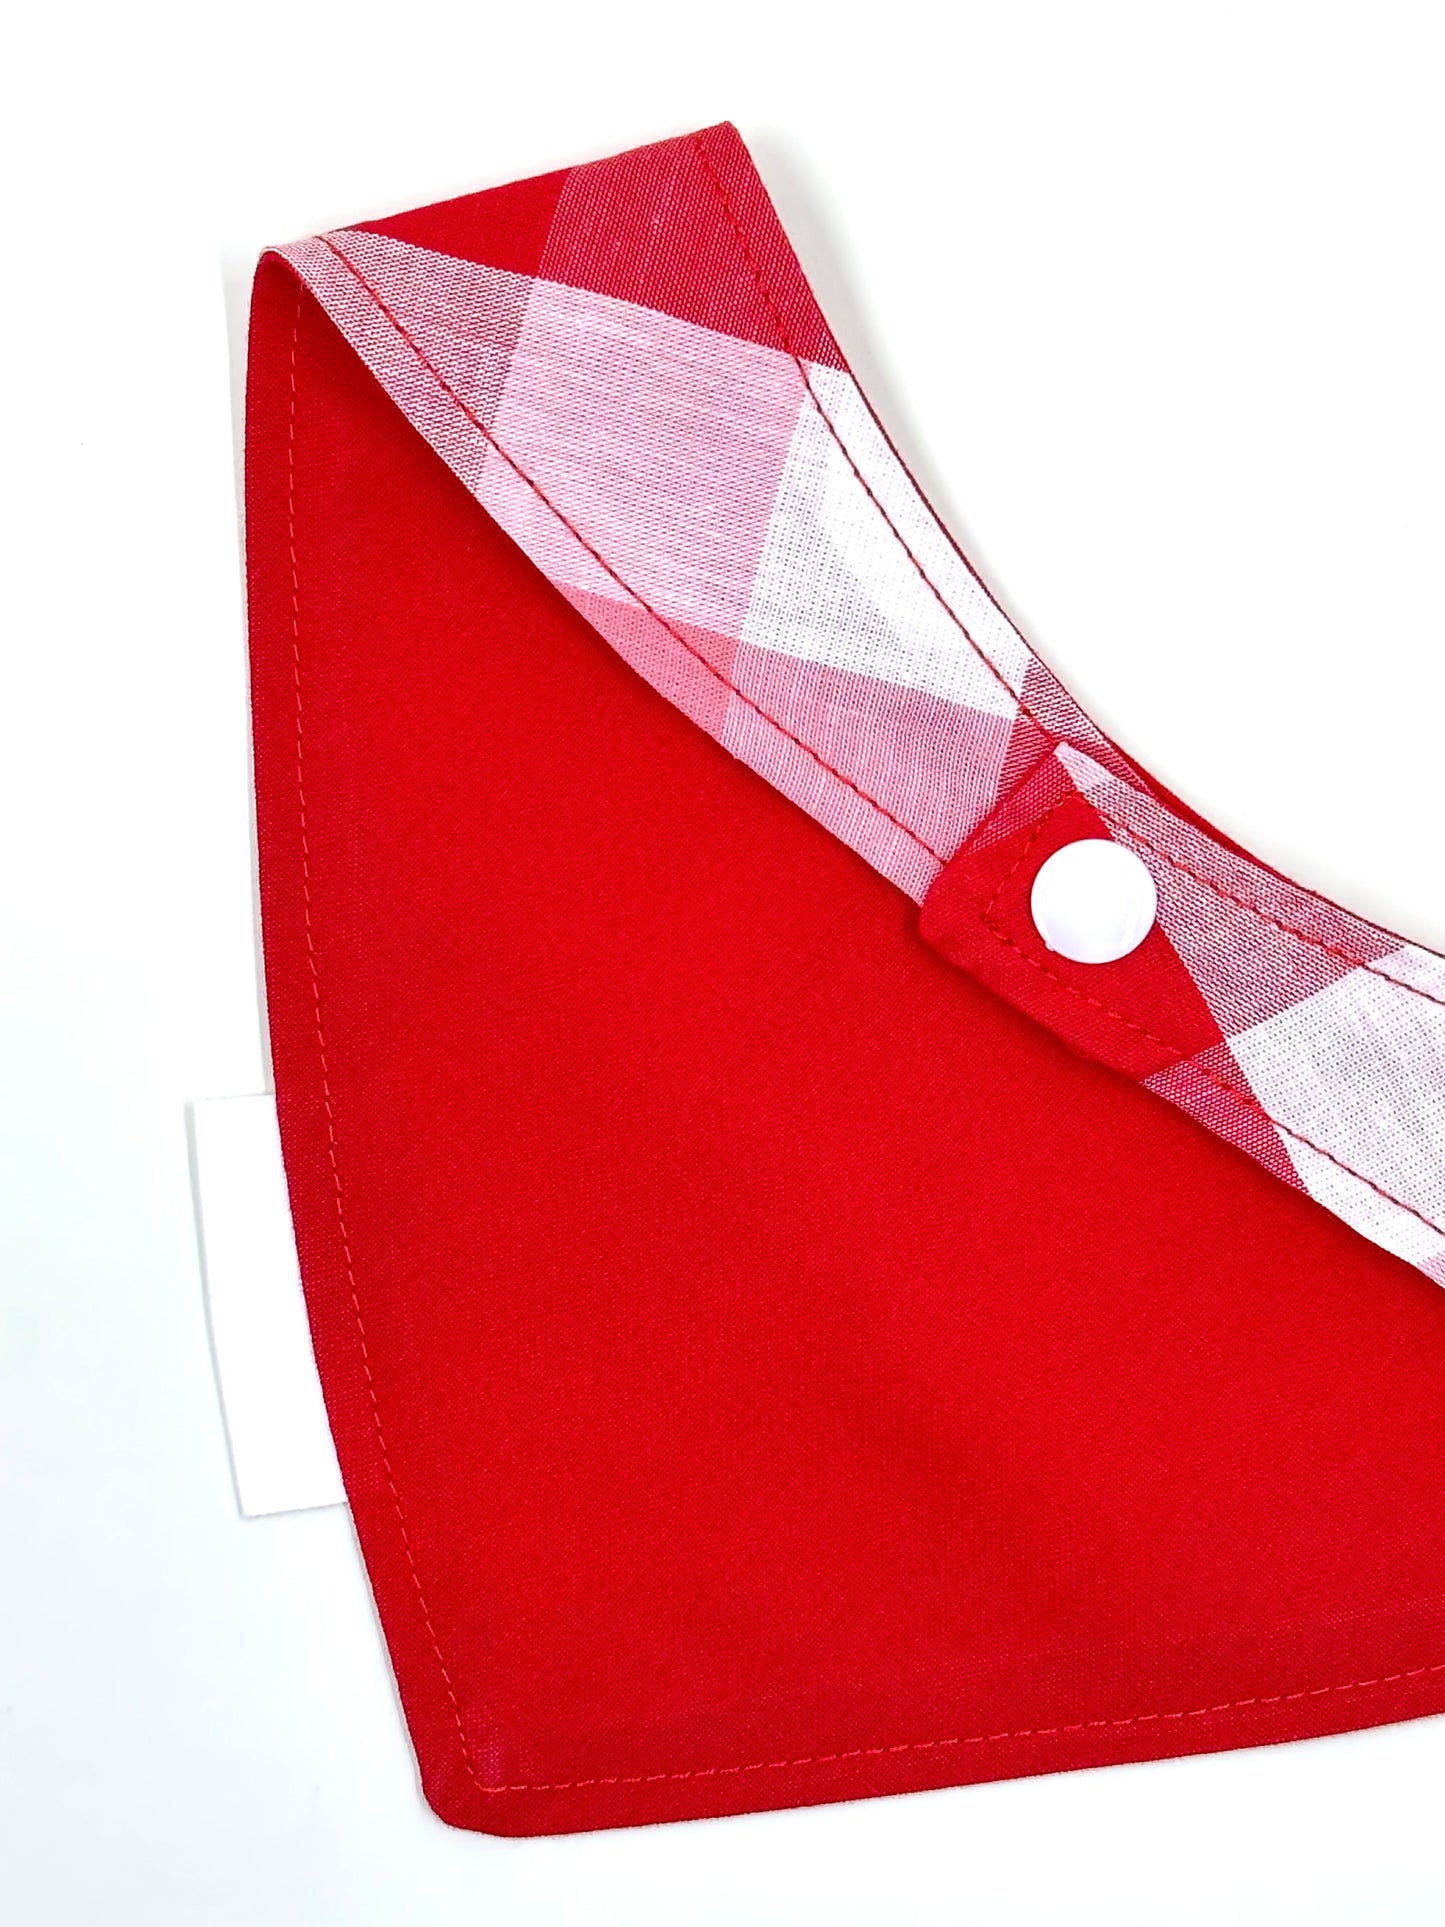 Plaid Red and White Custom Bandana